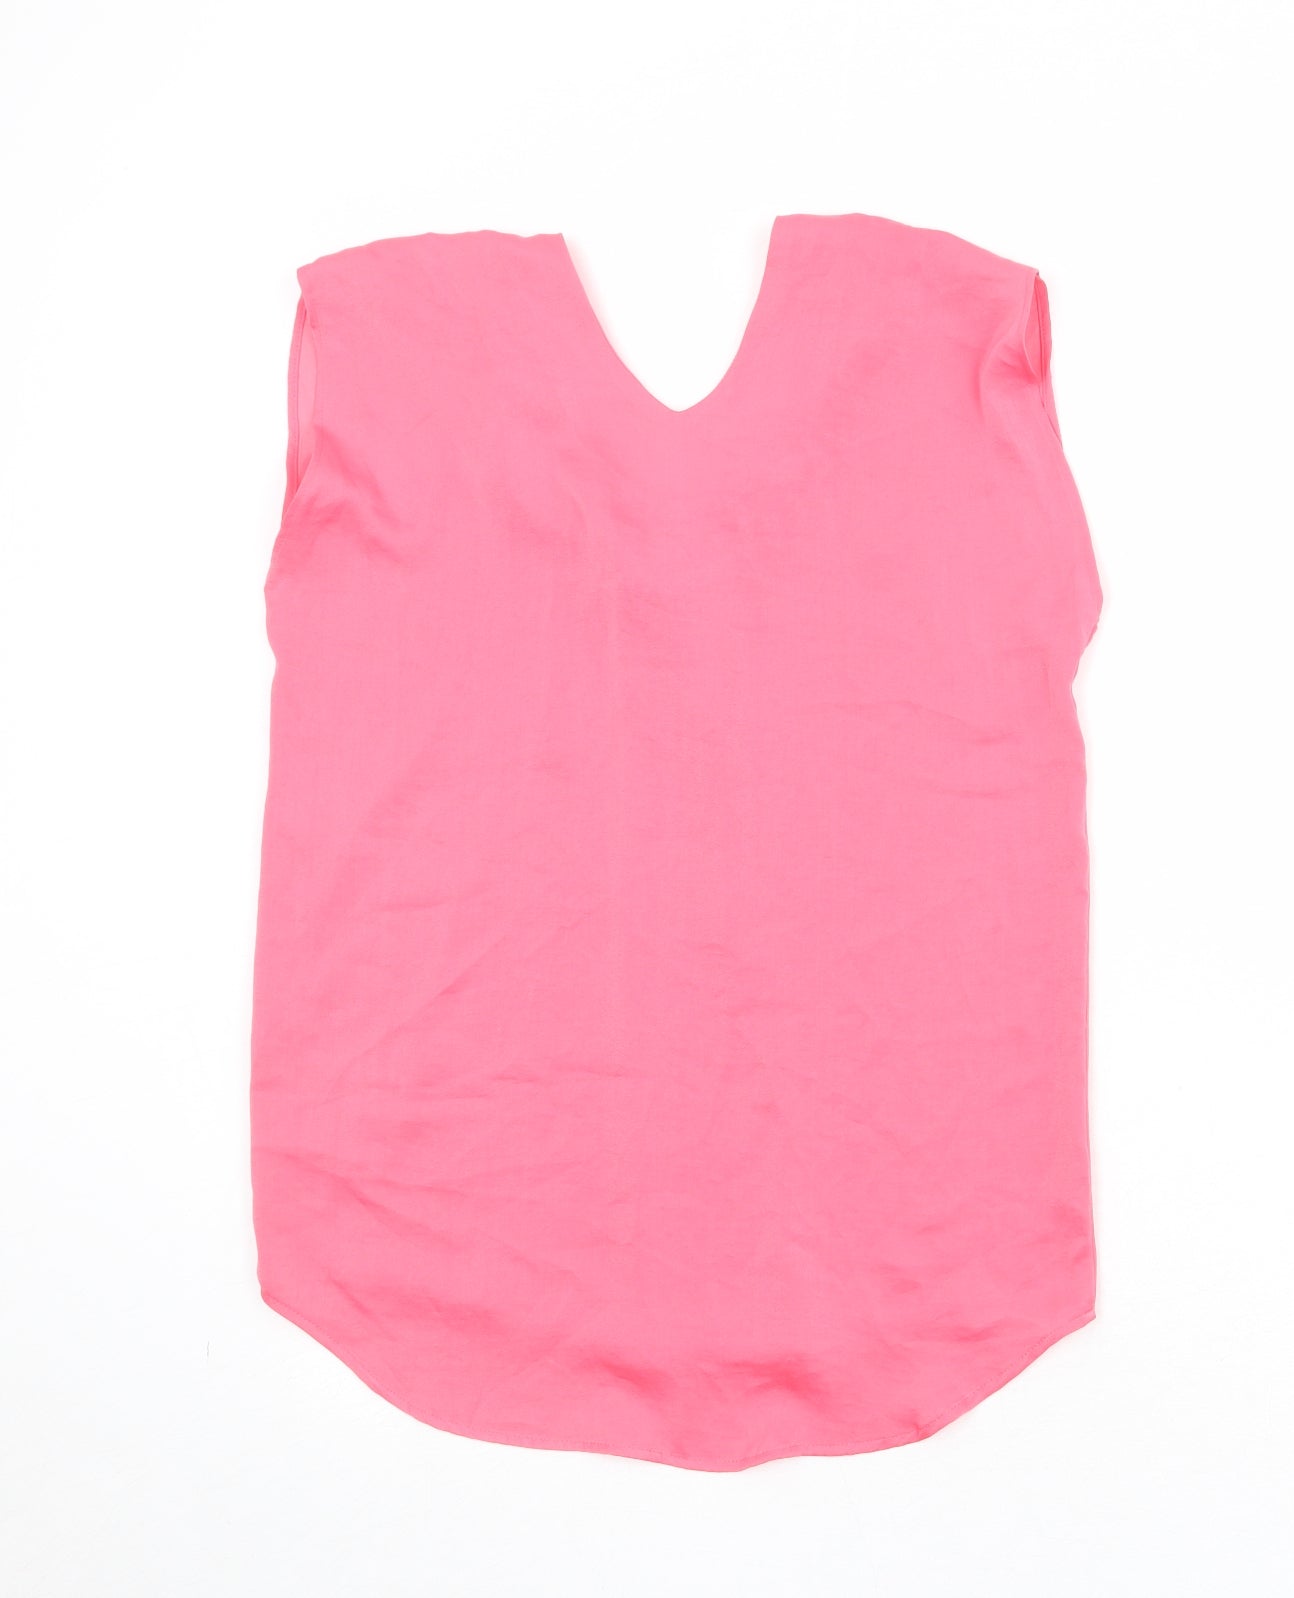 Marks and Spencer Womens Pink Polyester Basic Blouse Size 8 V-Neck